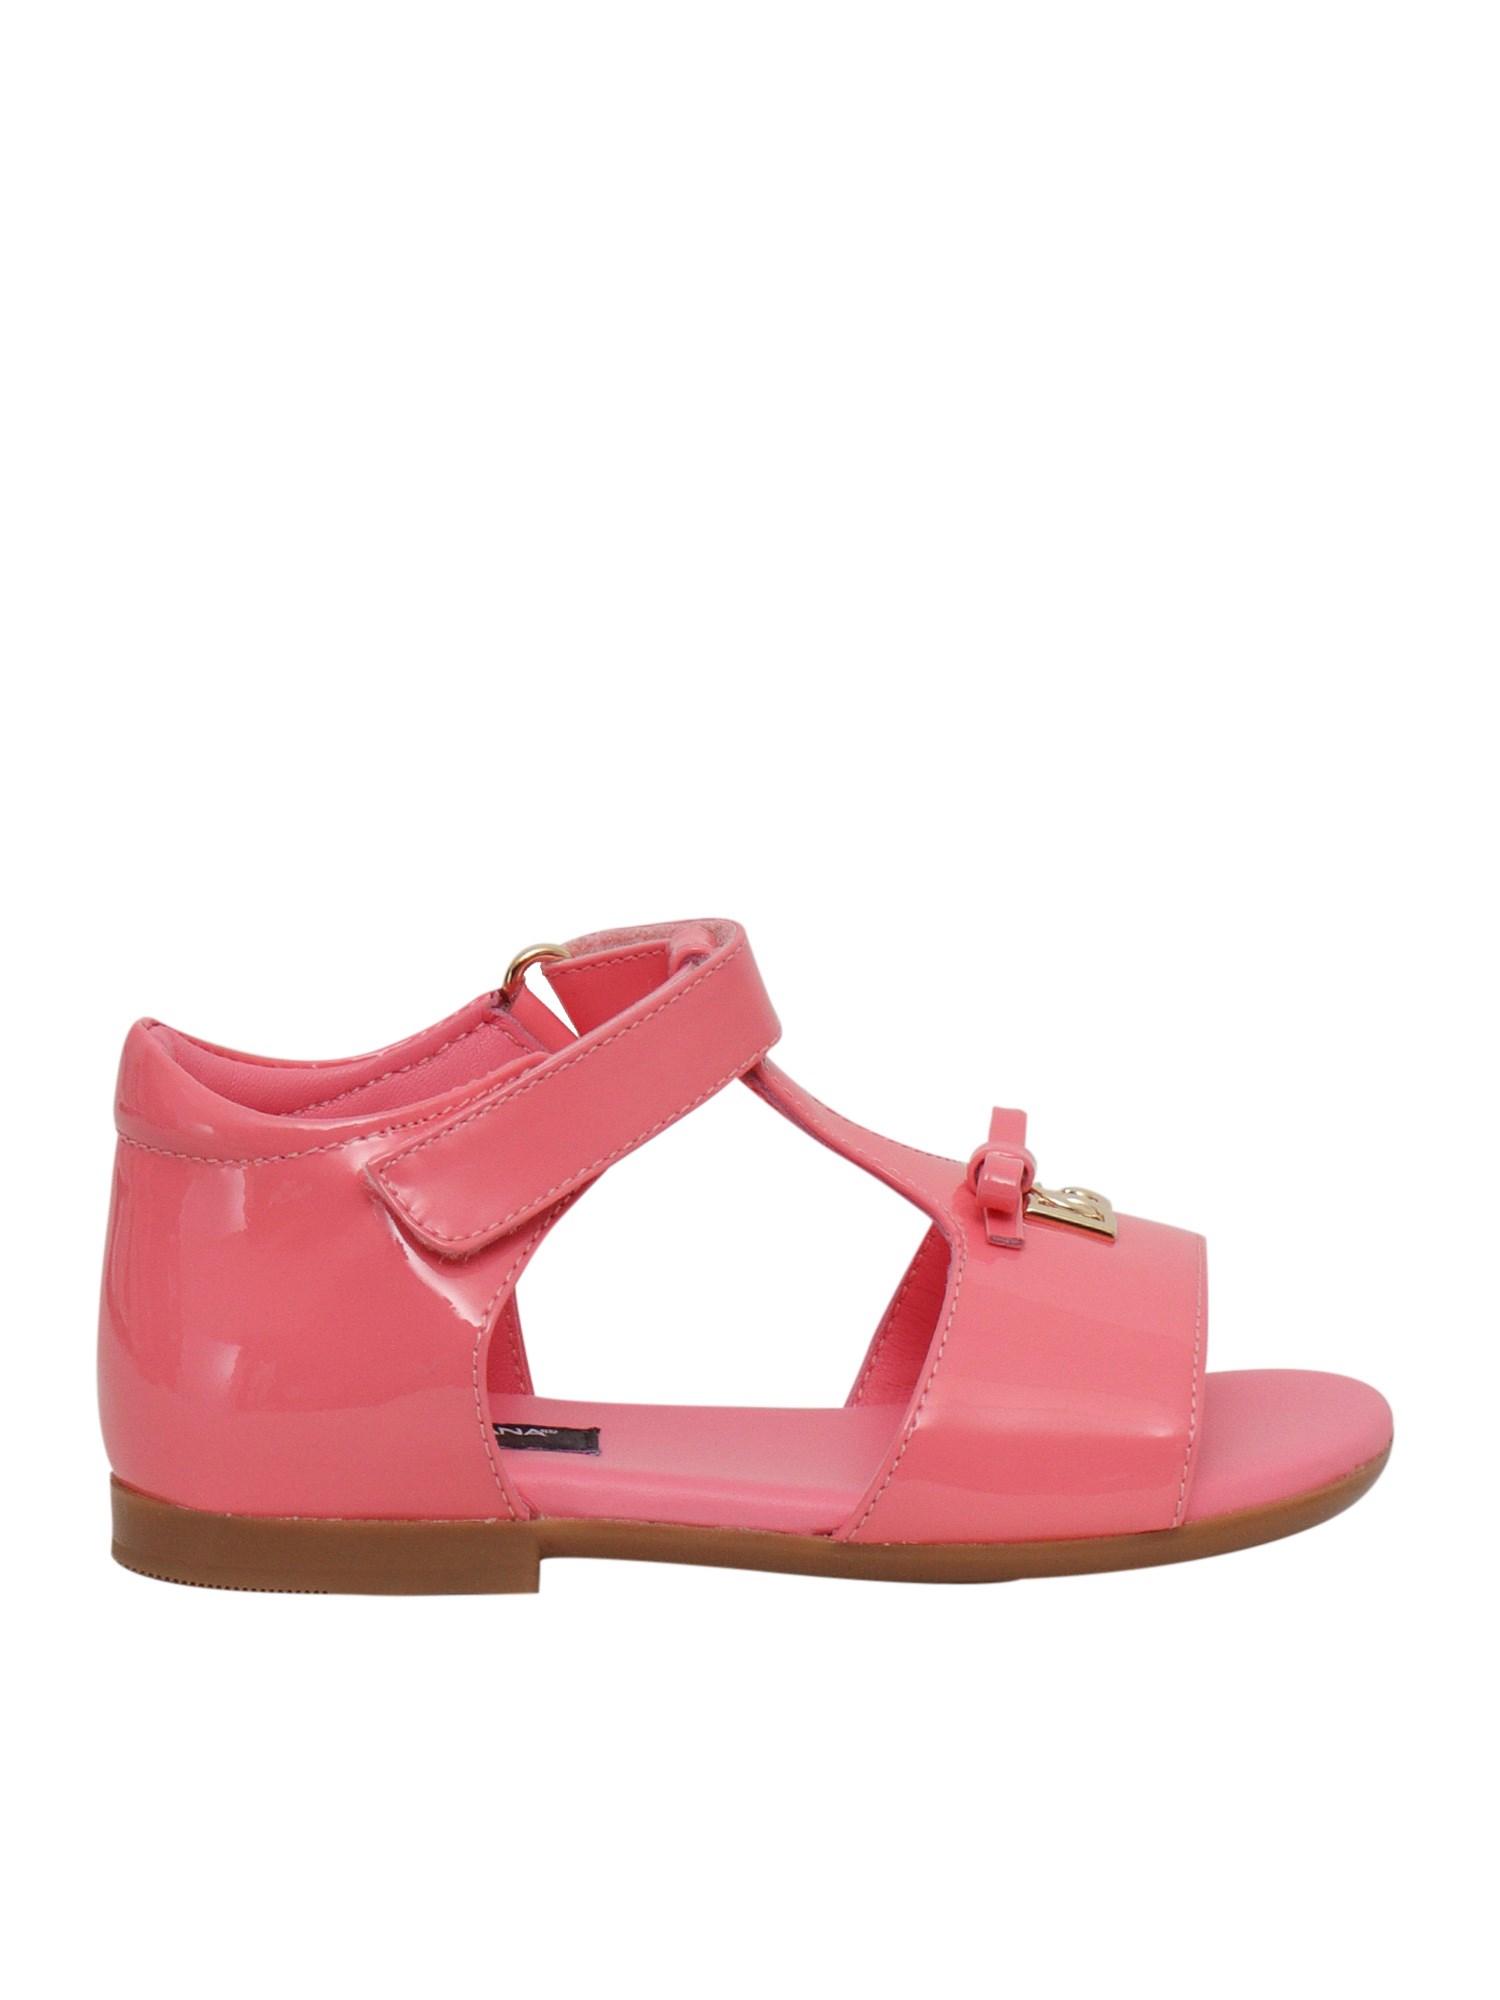 Dolce & Gabbana Junior D&g Leather Pink Sandals